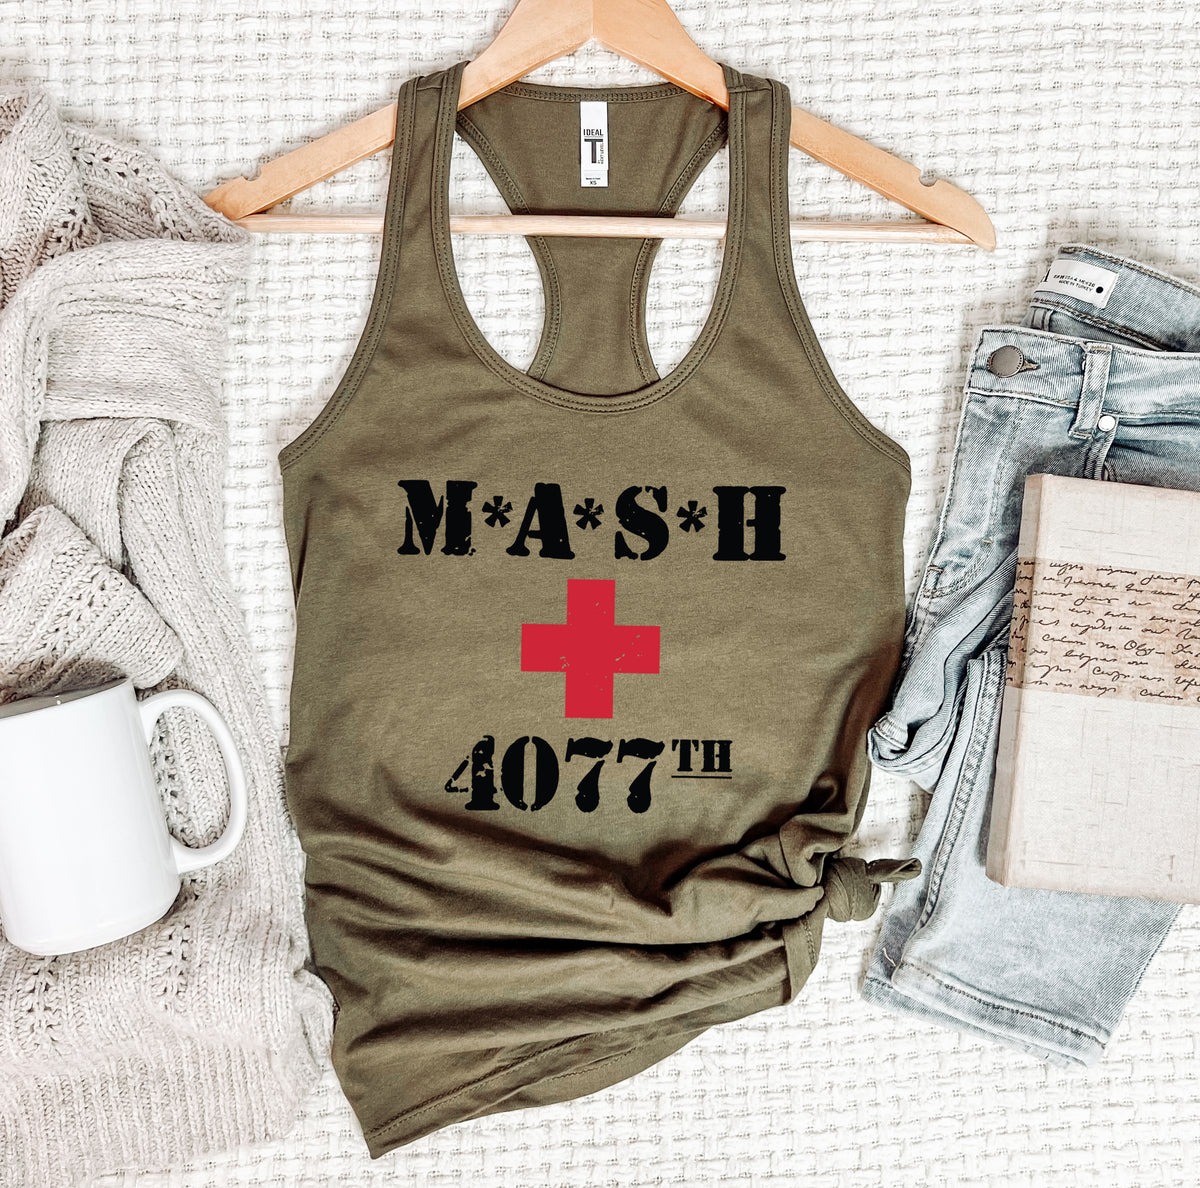 MASH 4077th Division TV Show Retro Shirt | Korean War Vintage T-shirt | Women's Slim-fit Racerback Tank Top